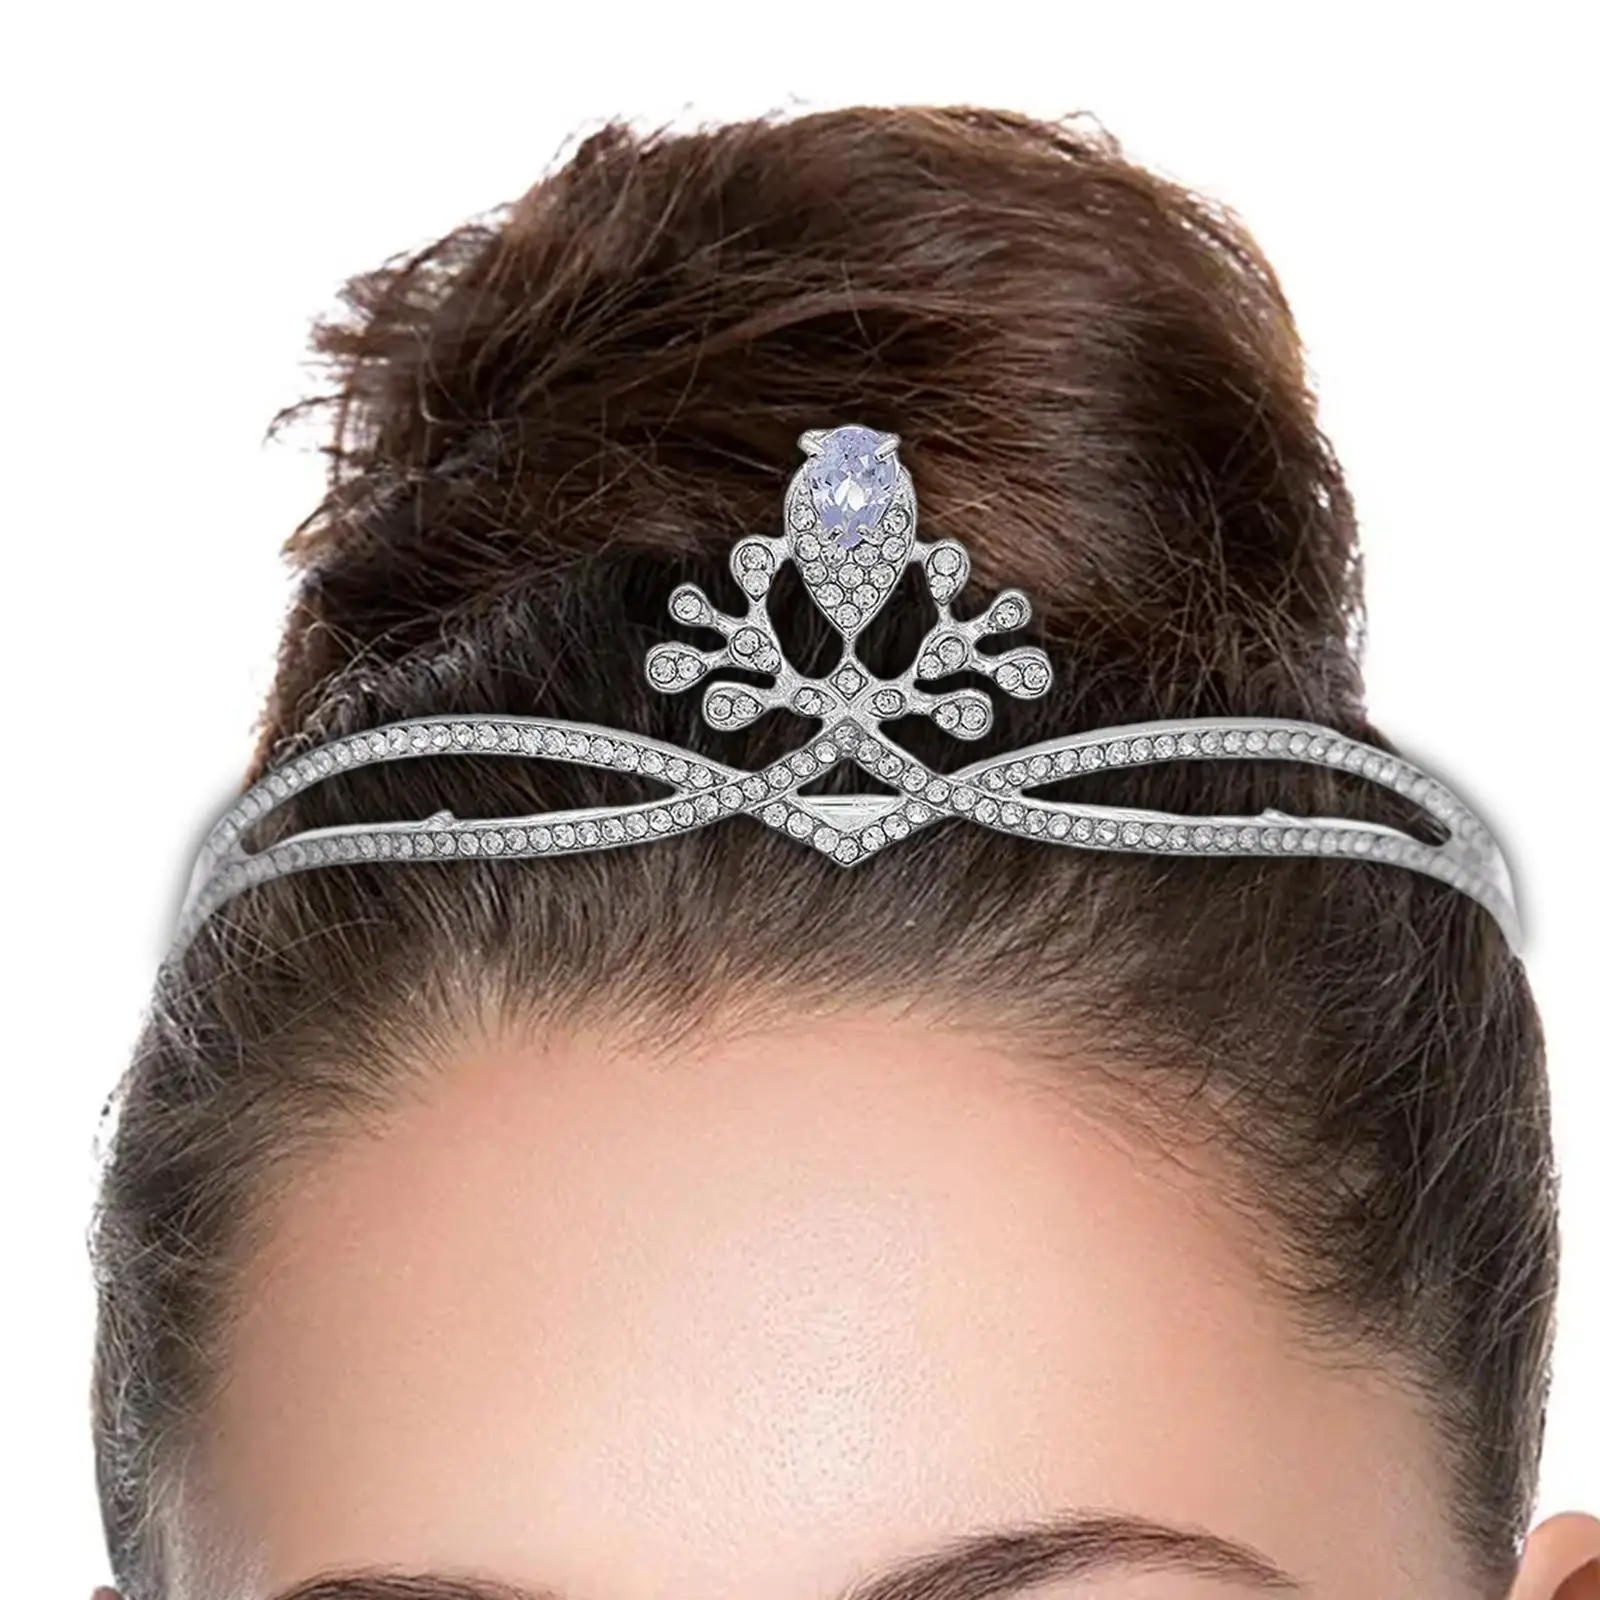 Headpiece Rhinestone Bridal Headpiece for Cosplay Celebration Masquerade